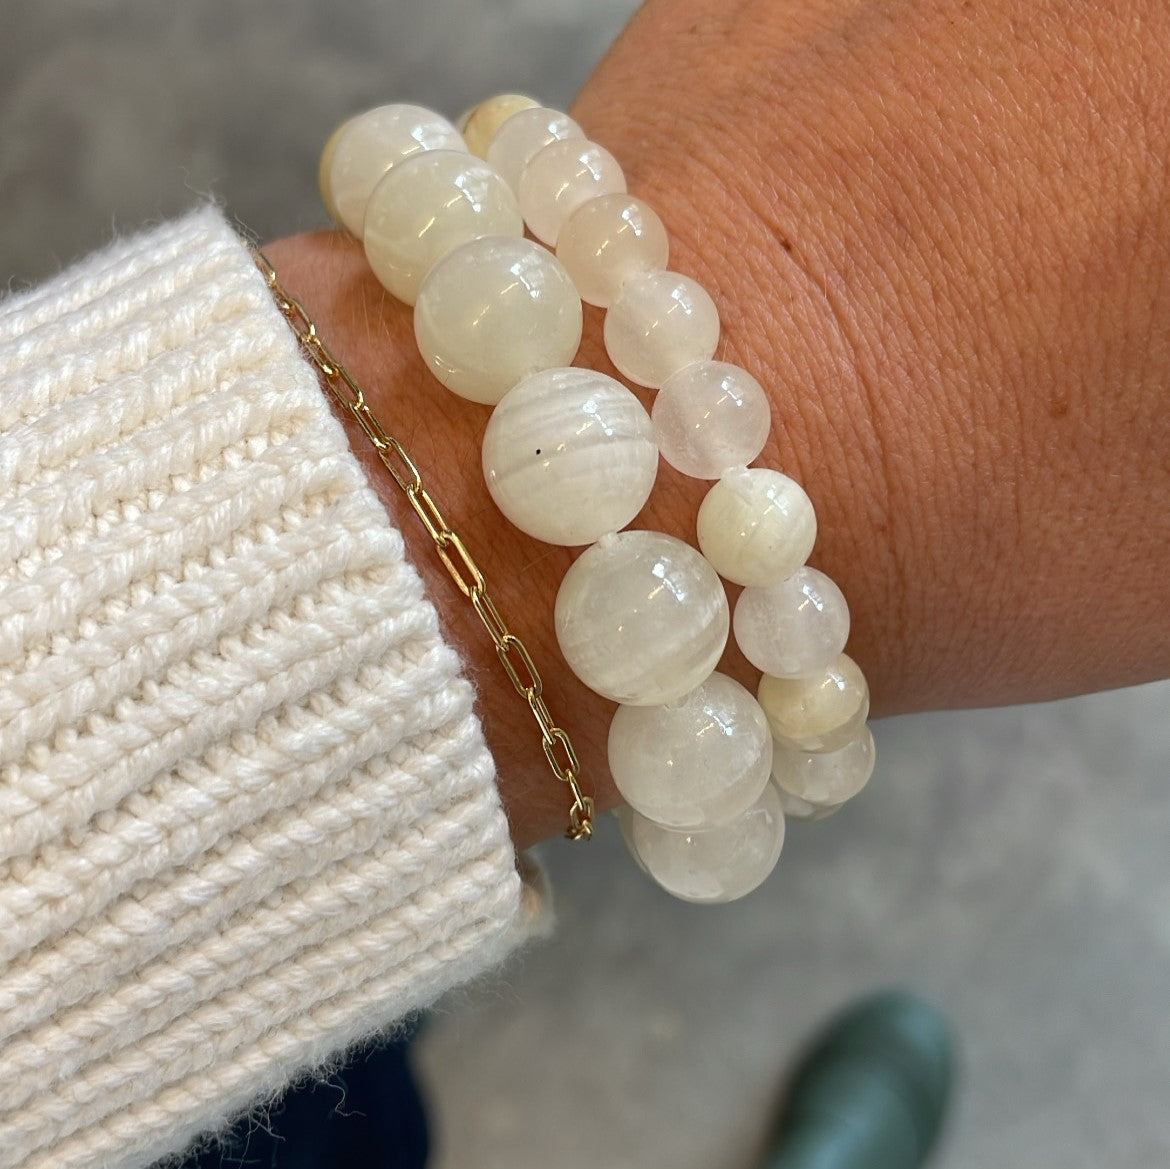 Pearl bracelet - Marble S